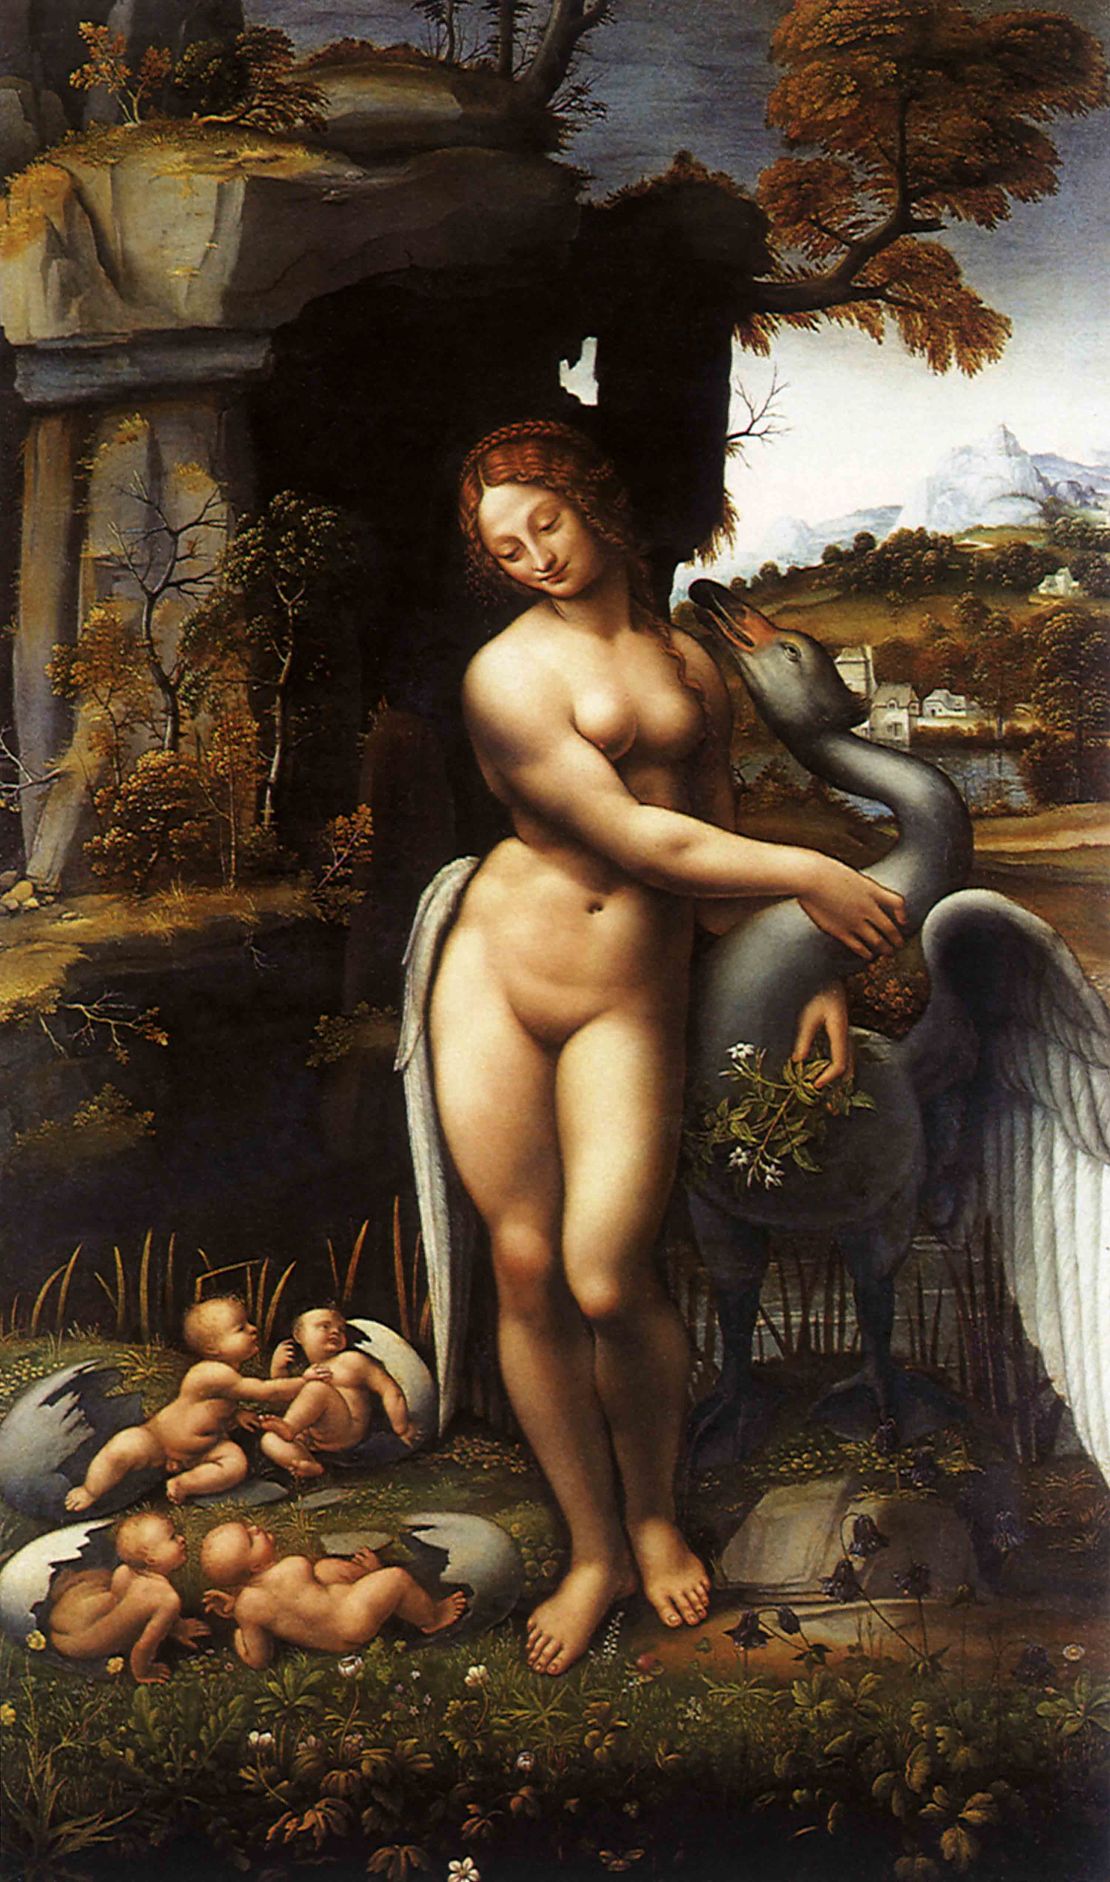 Leonardo da Vinci's version of the legend of Leda and the Swan.